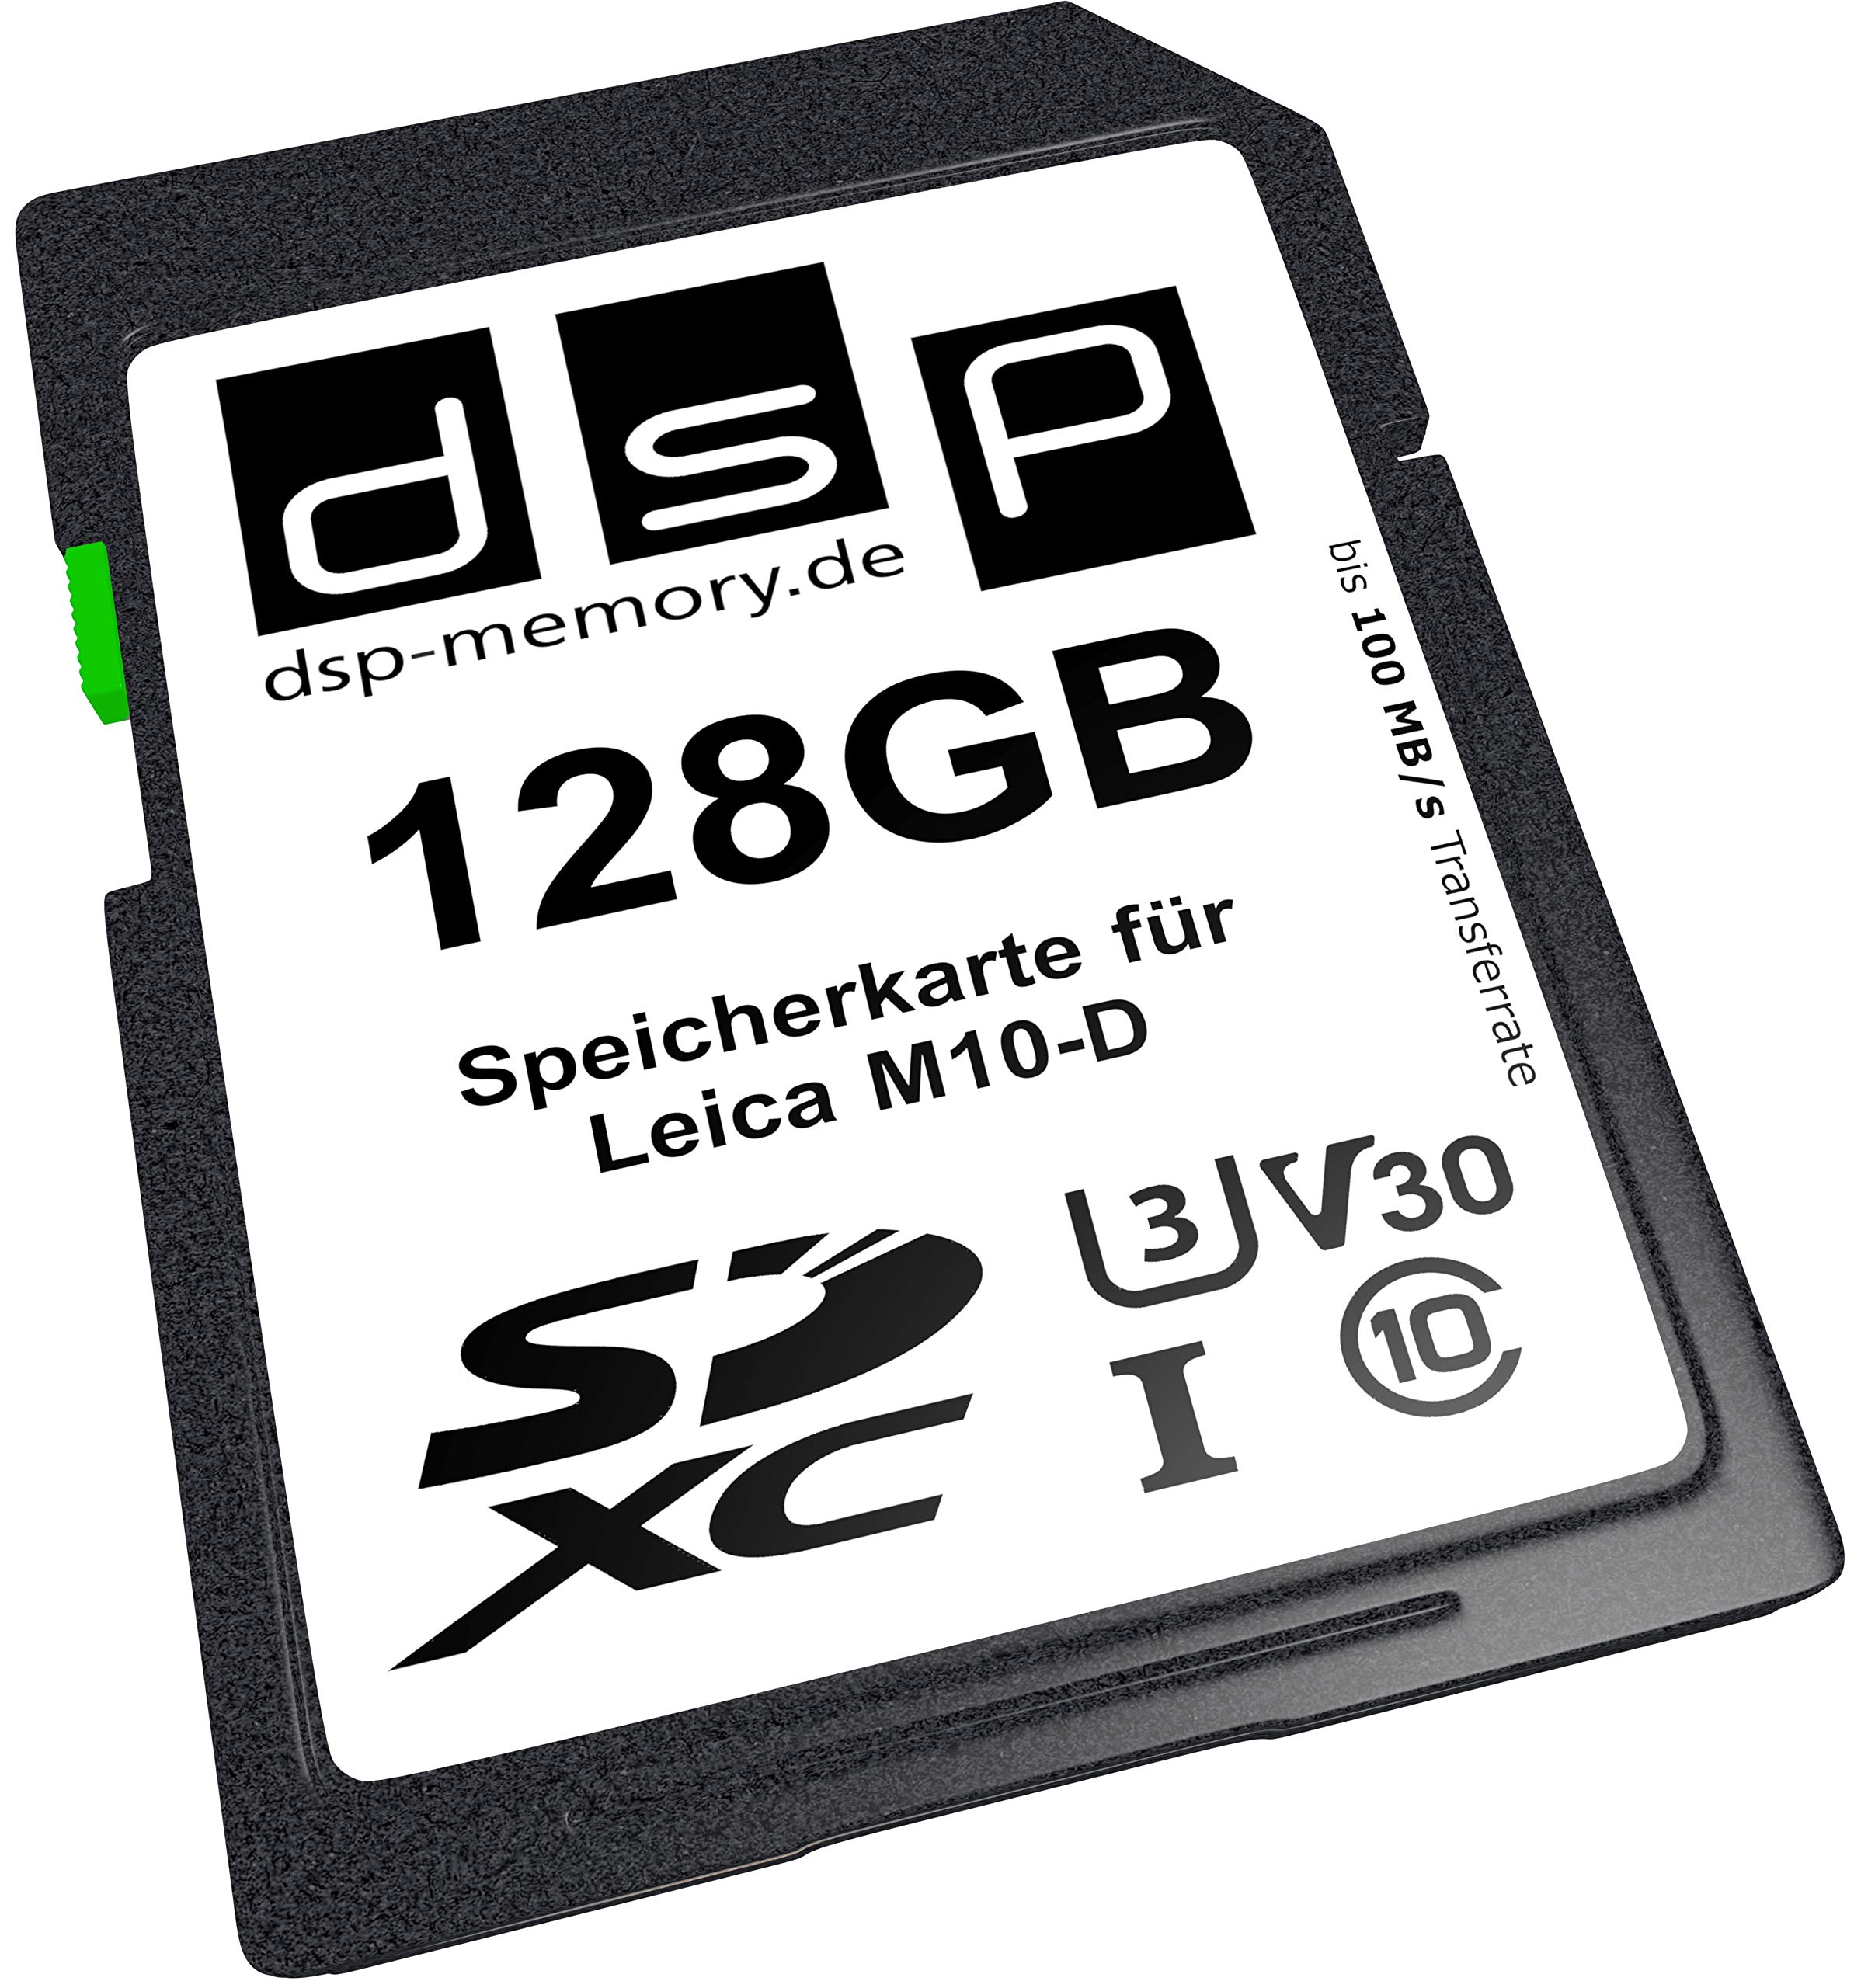 DSP Memory 128GB Professional V30 Speicherkarte für Leica M10-D Digitalkamera